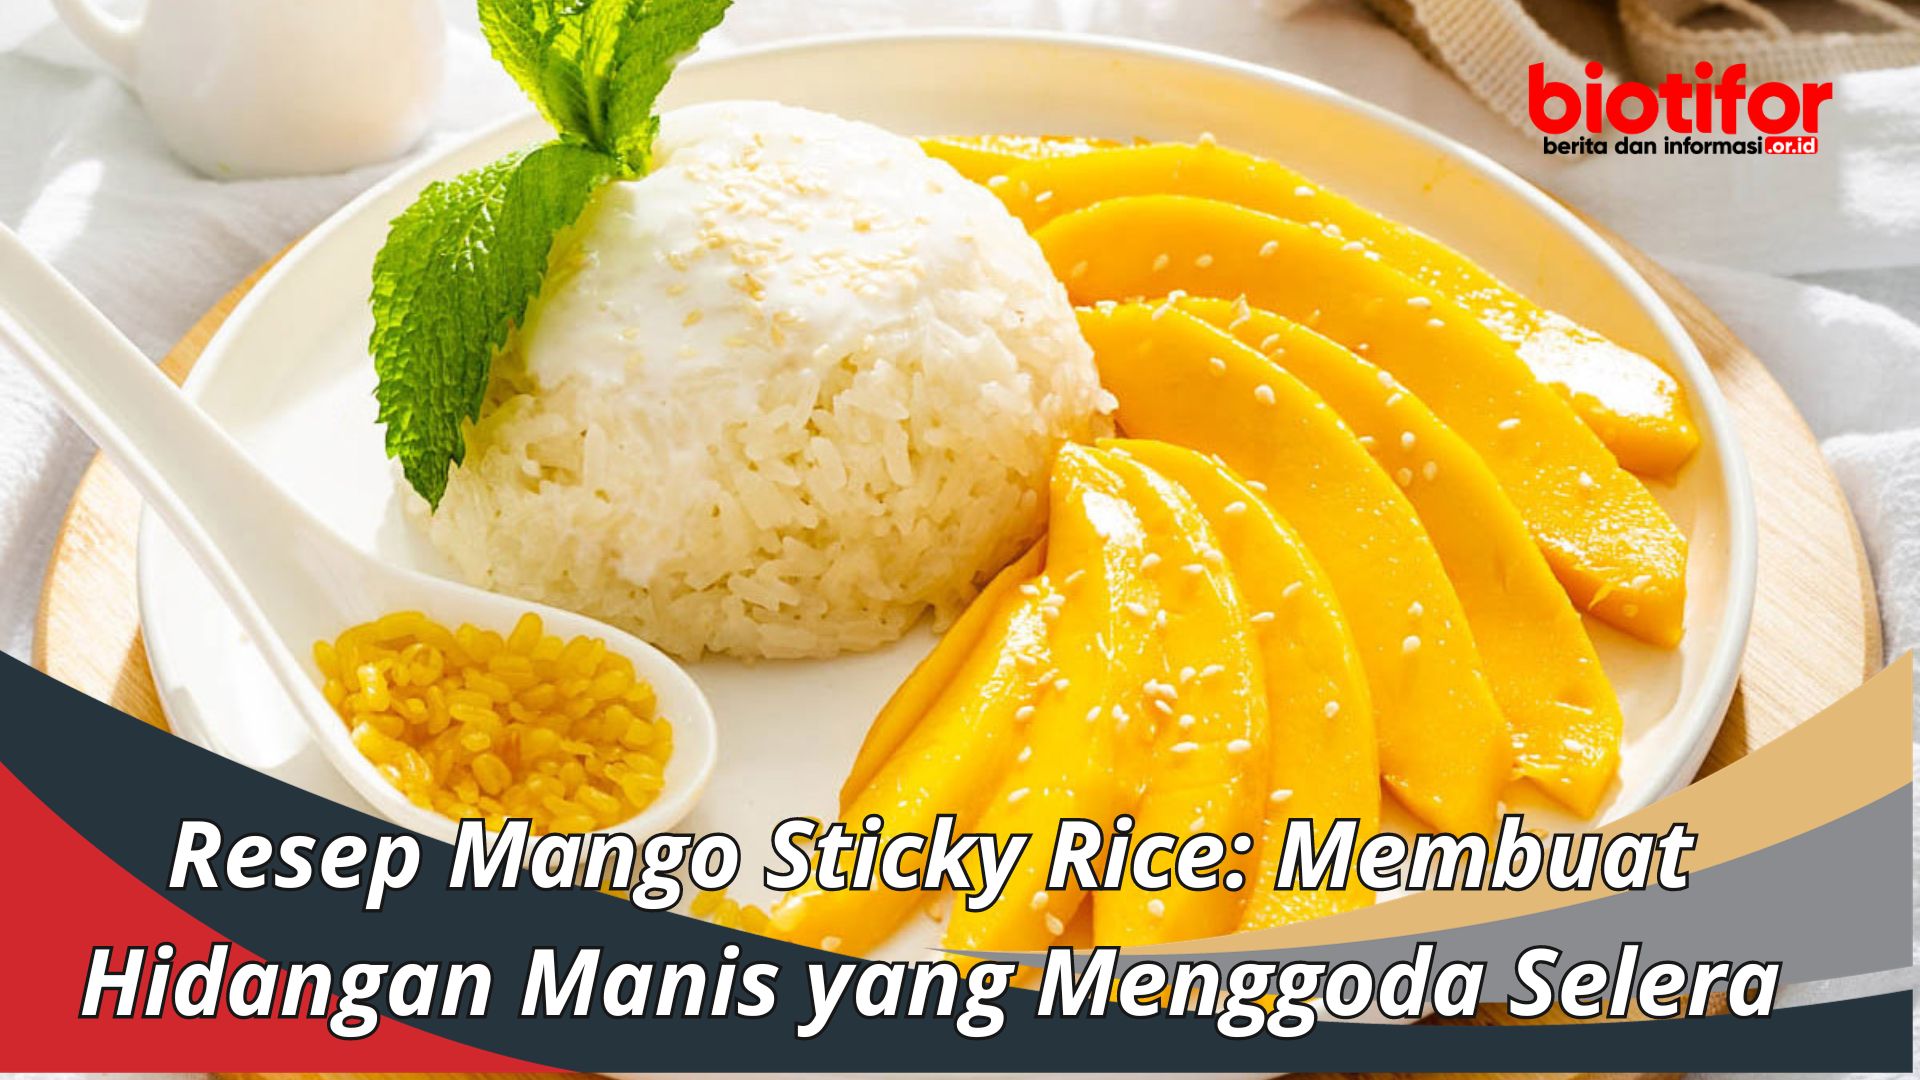 Resep Mango Sticky Rice Membuat Hidangan Manis yang Menggoda Selera